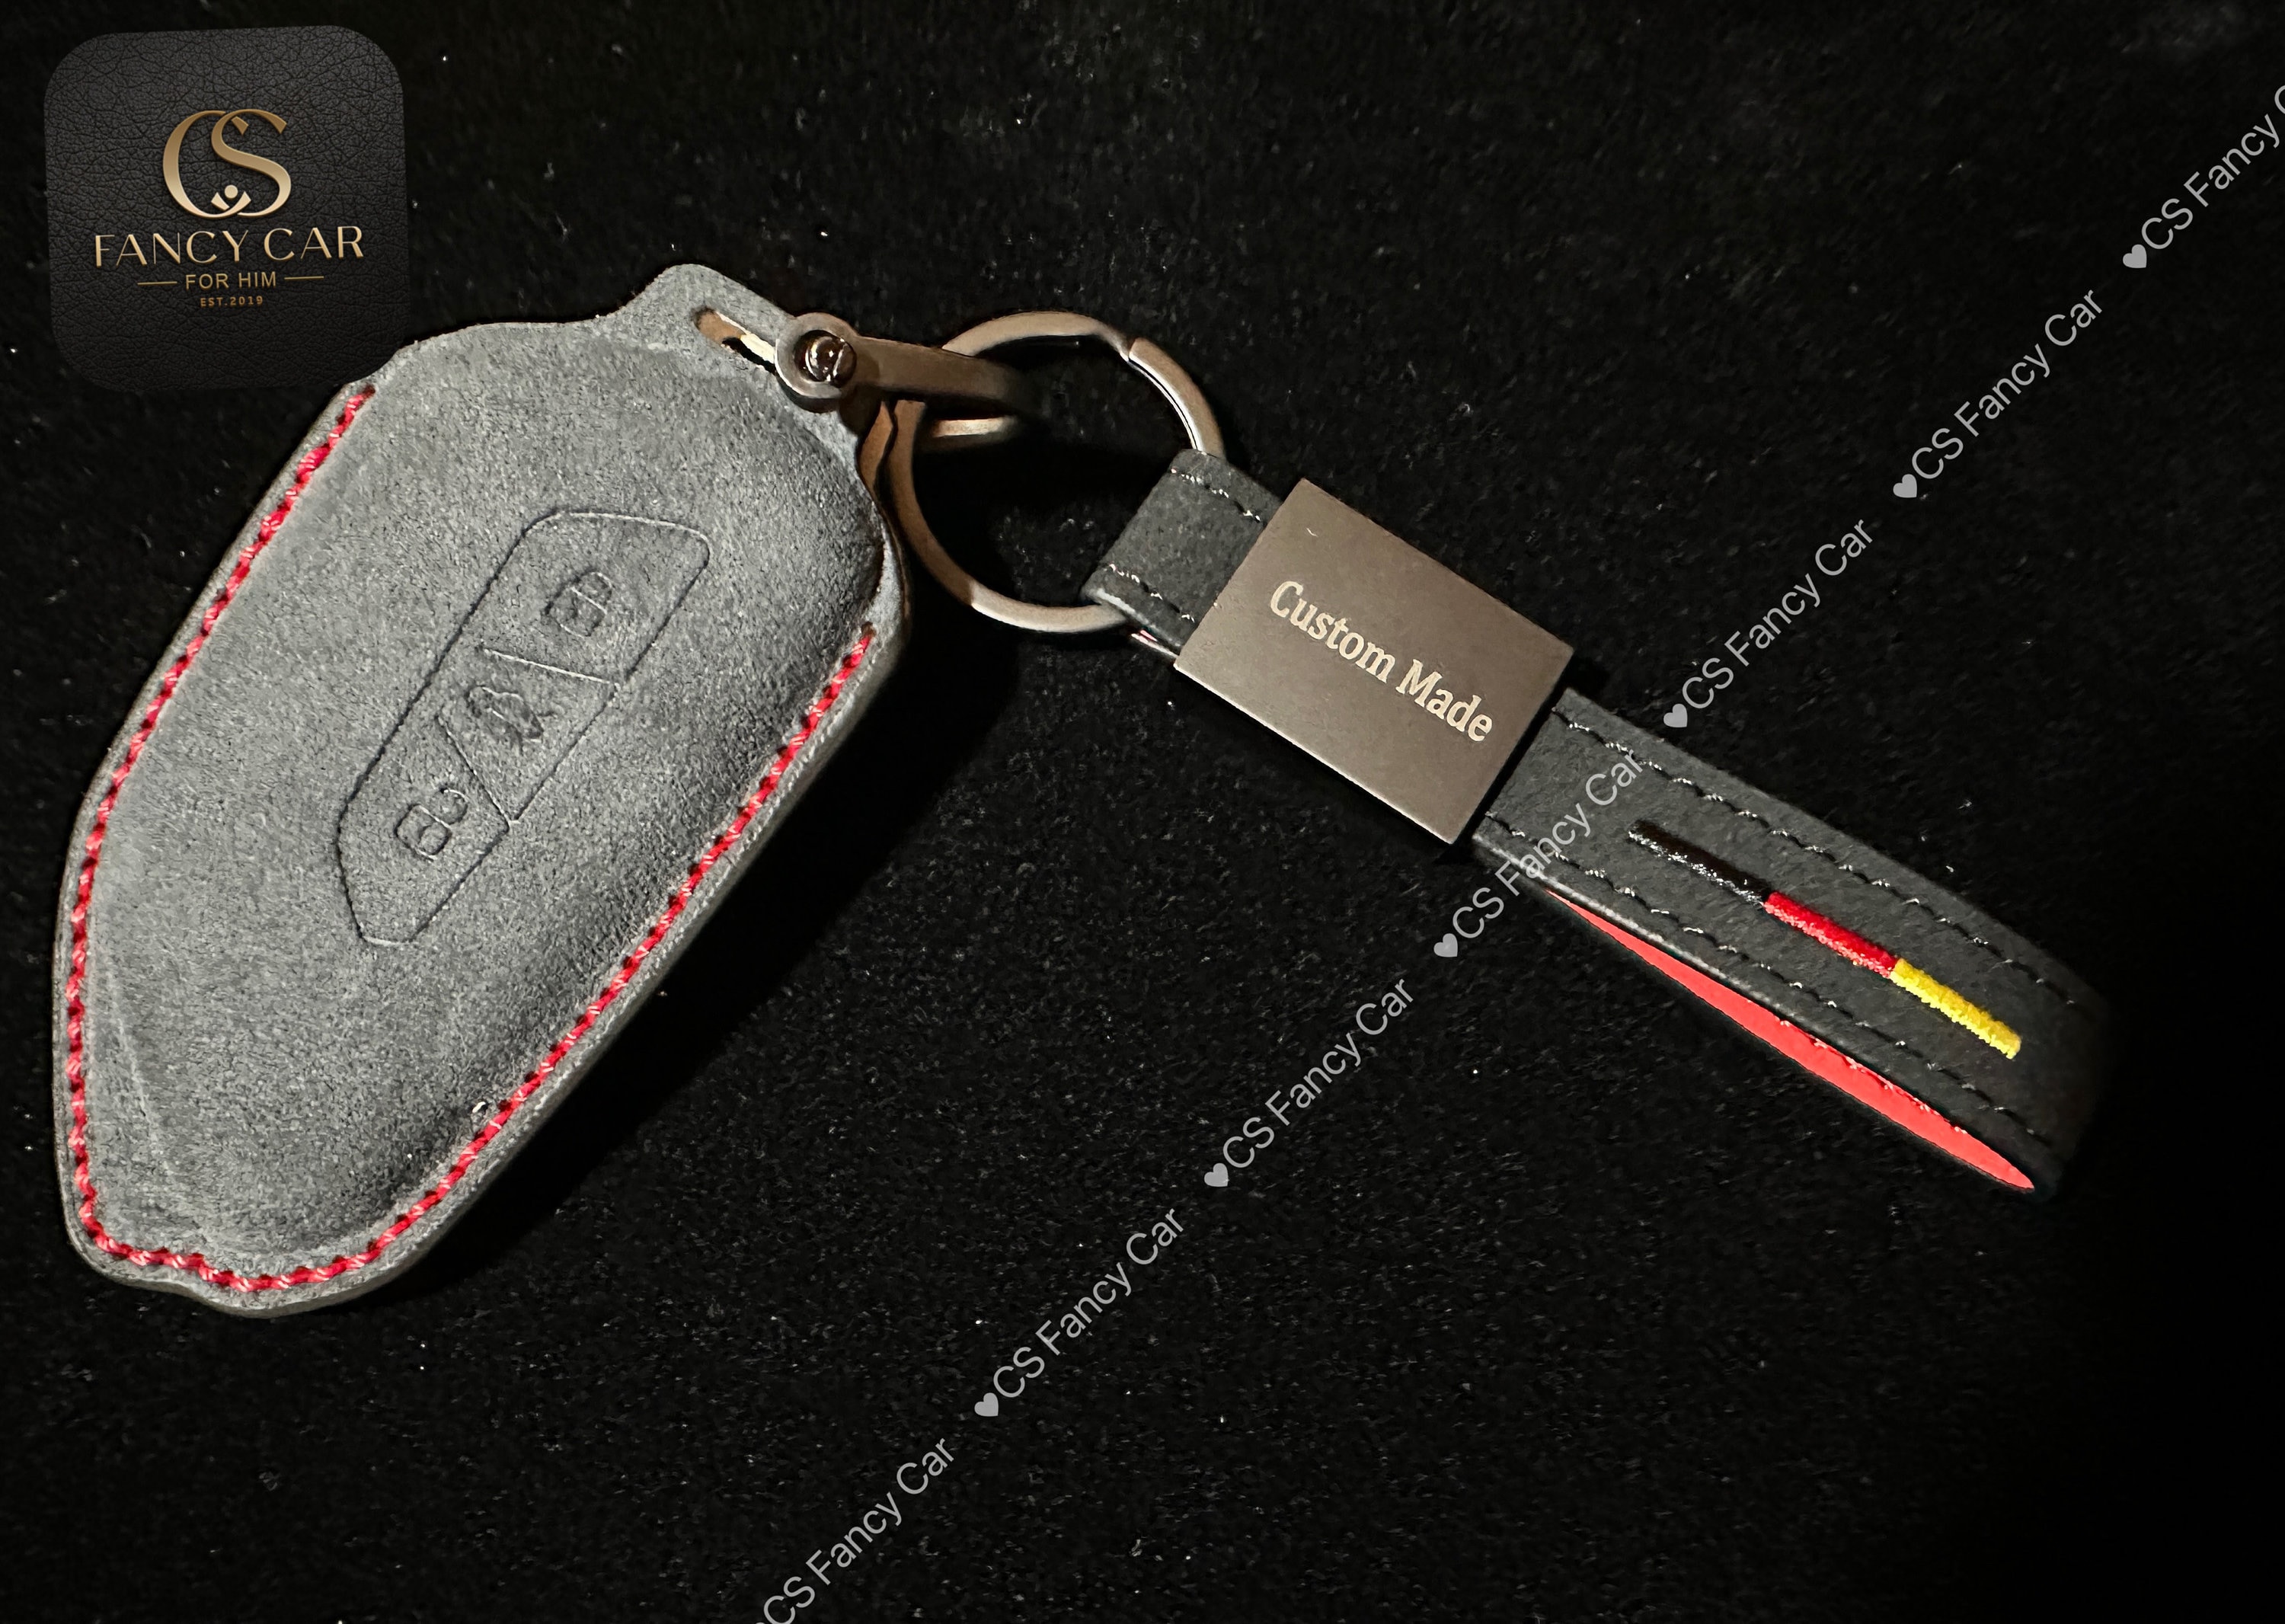 TBU car Autoschlüssel Hülle kompatibel mit VW GTI / R-Line 3 Tasten -  Schutzhülle aus Silikon - Auto Schlüsselhülle Cover in Rot